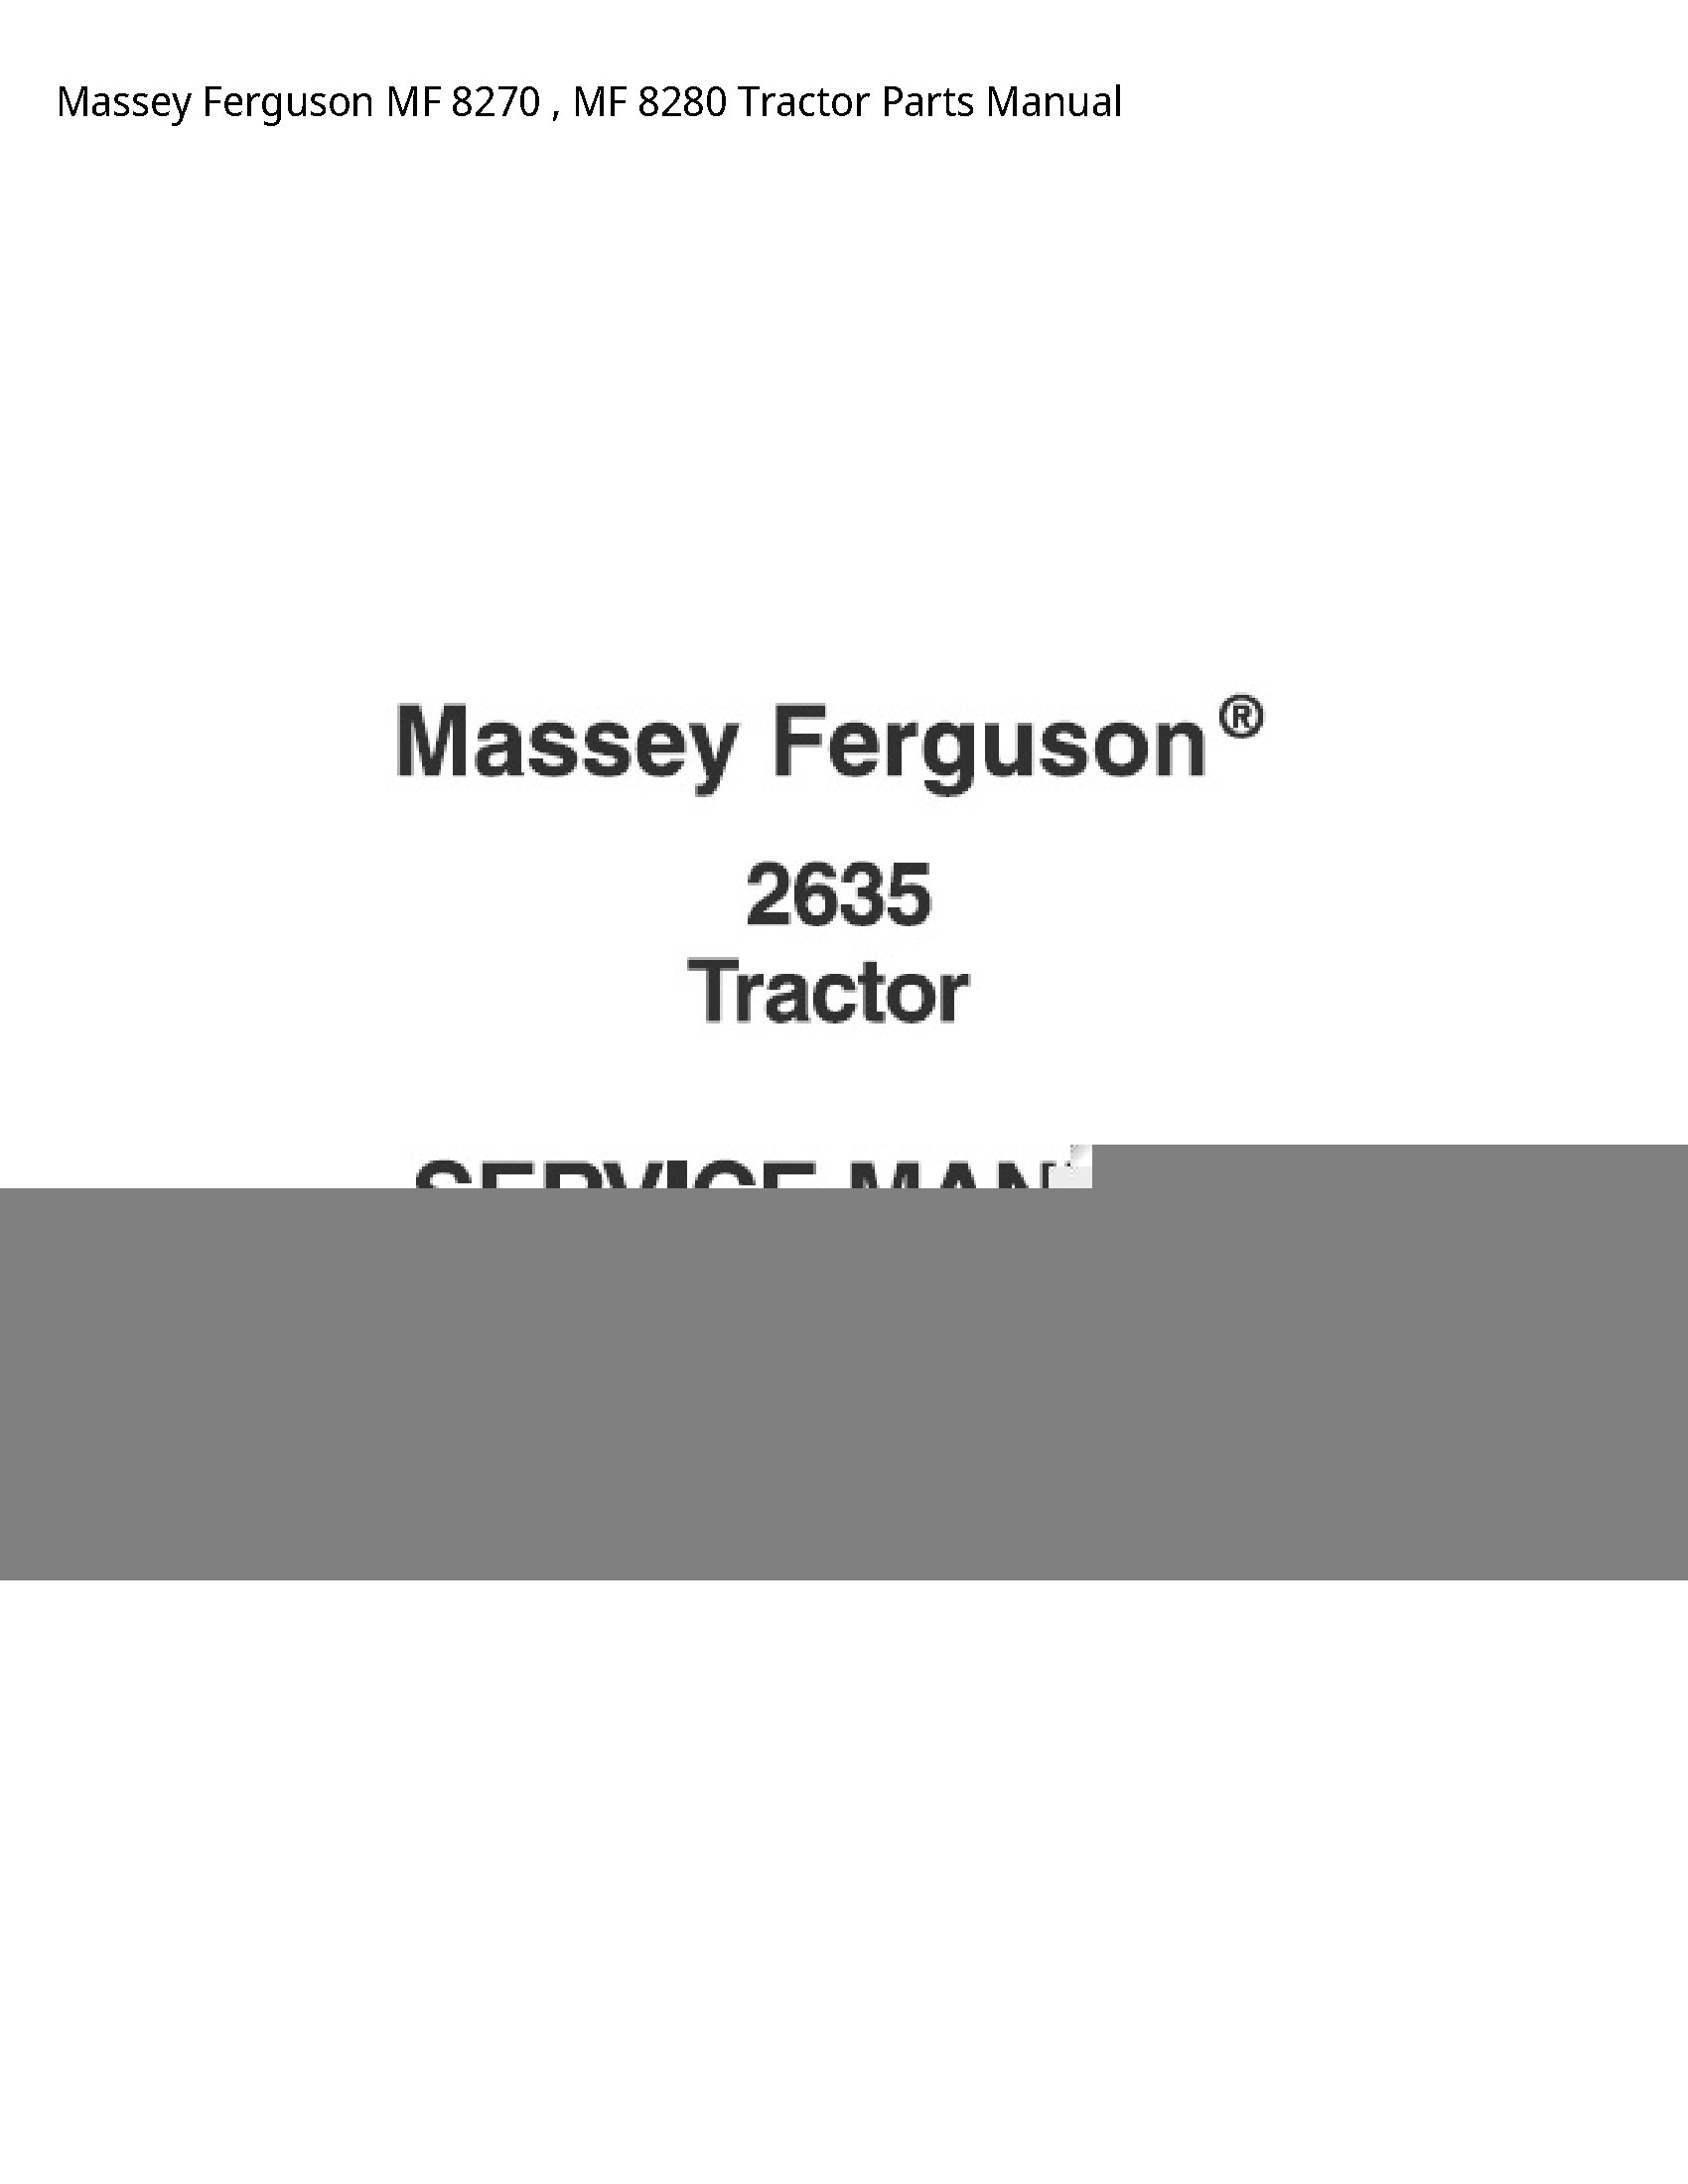 Massey Ferguson 8270 MF MF Tractor Parts manual